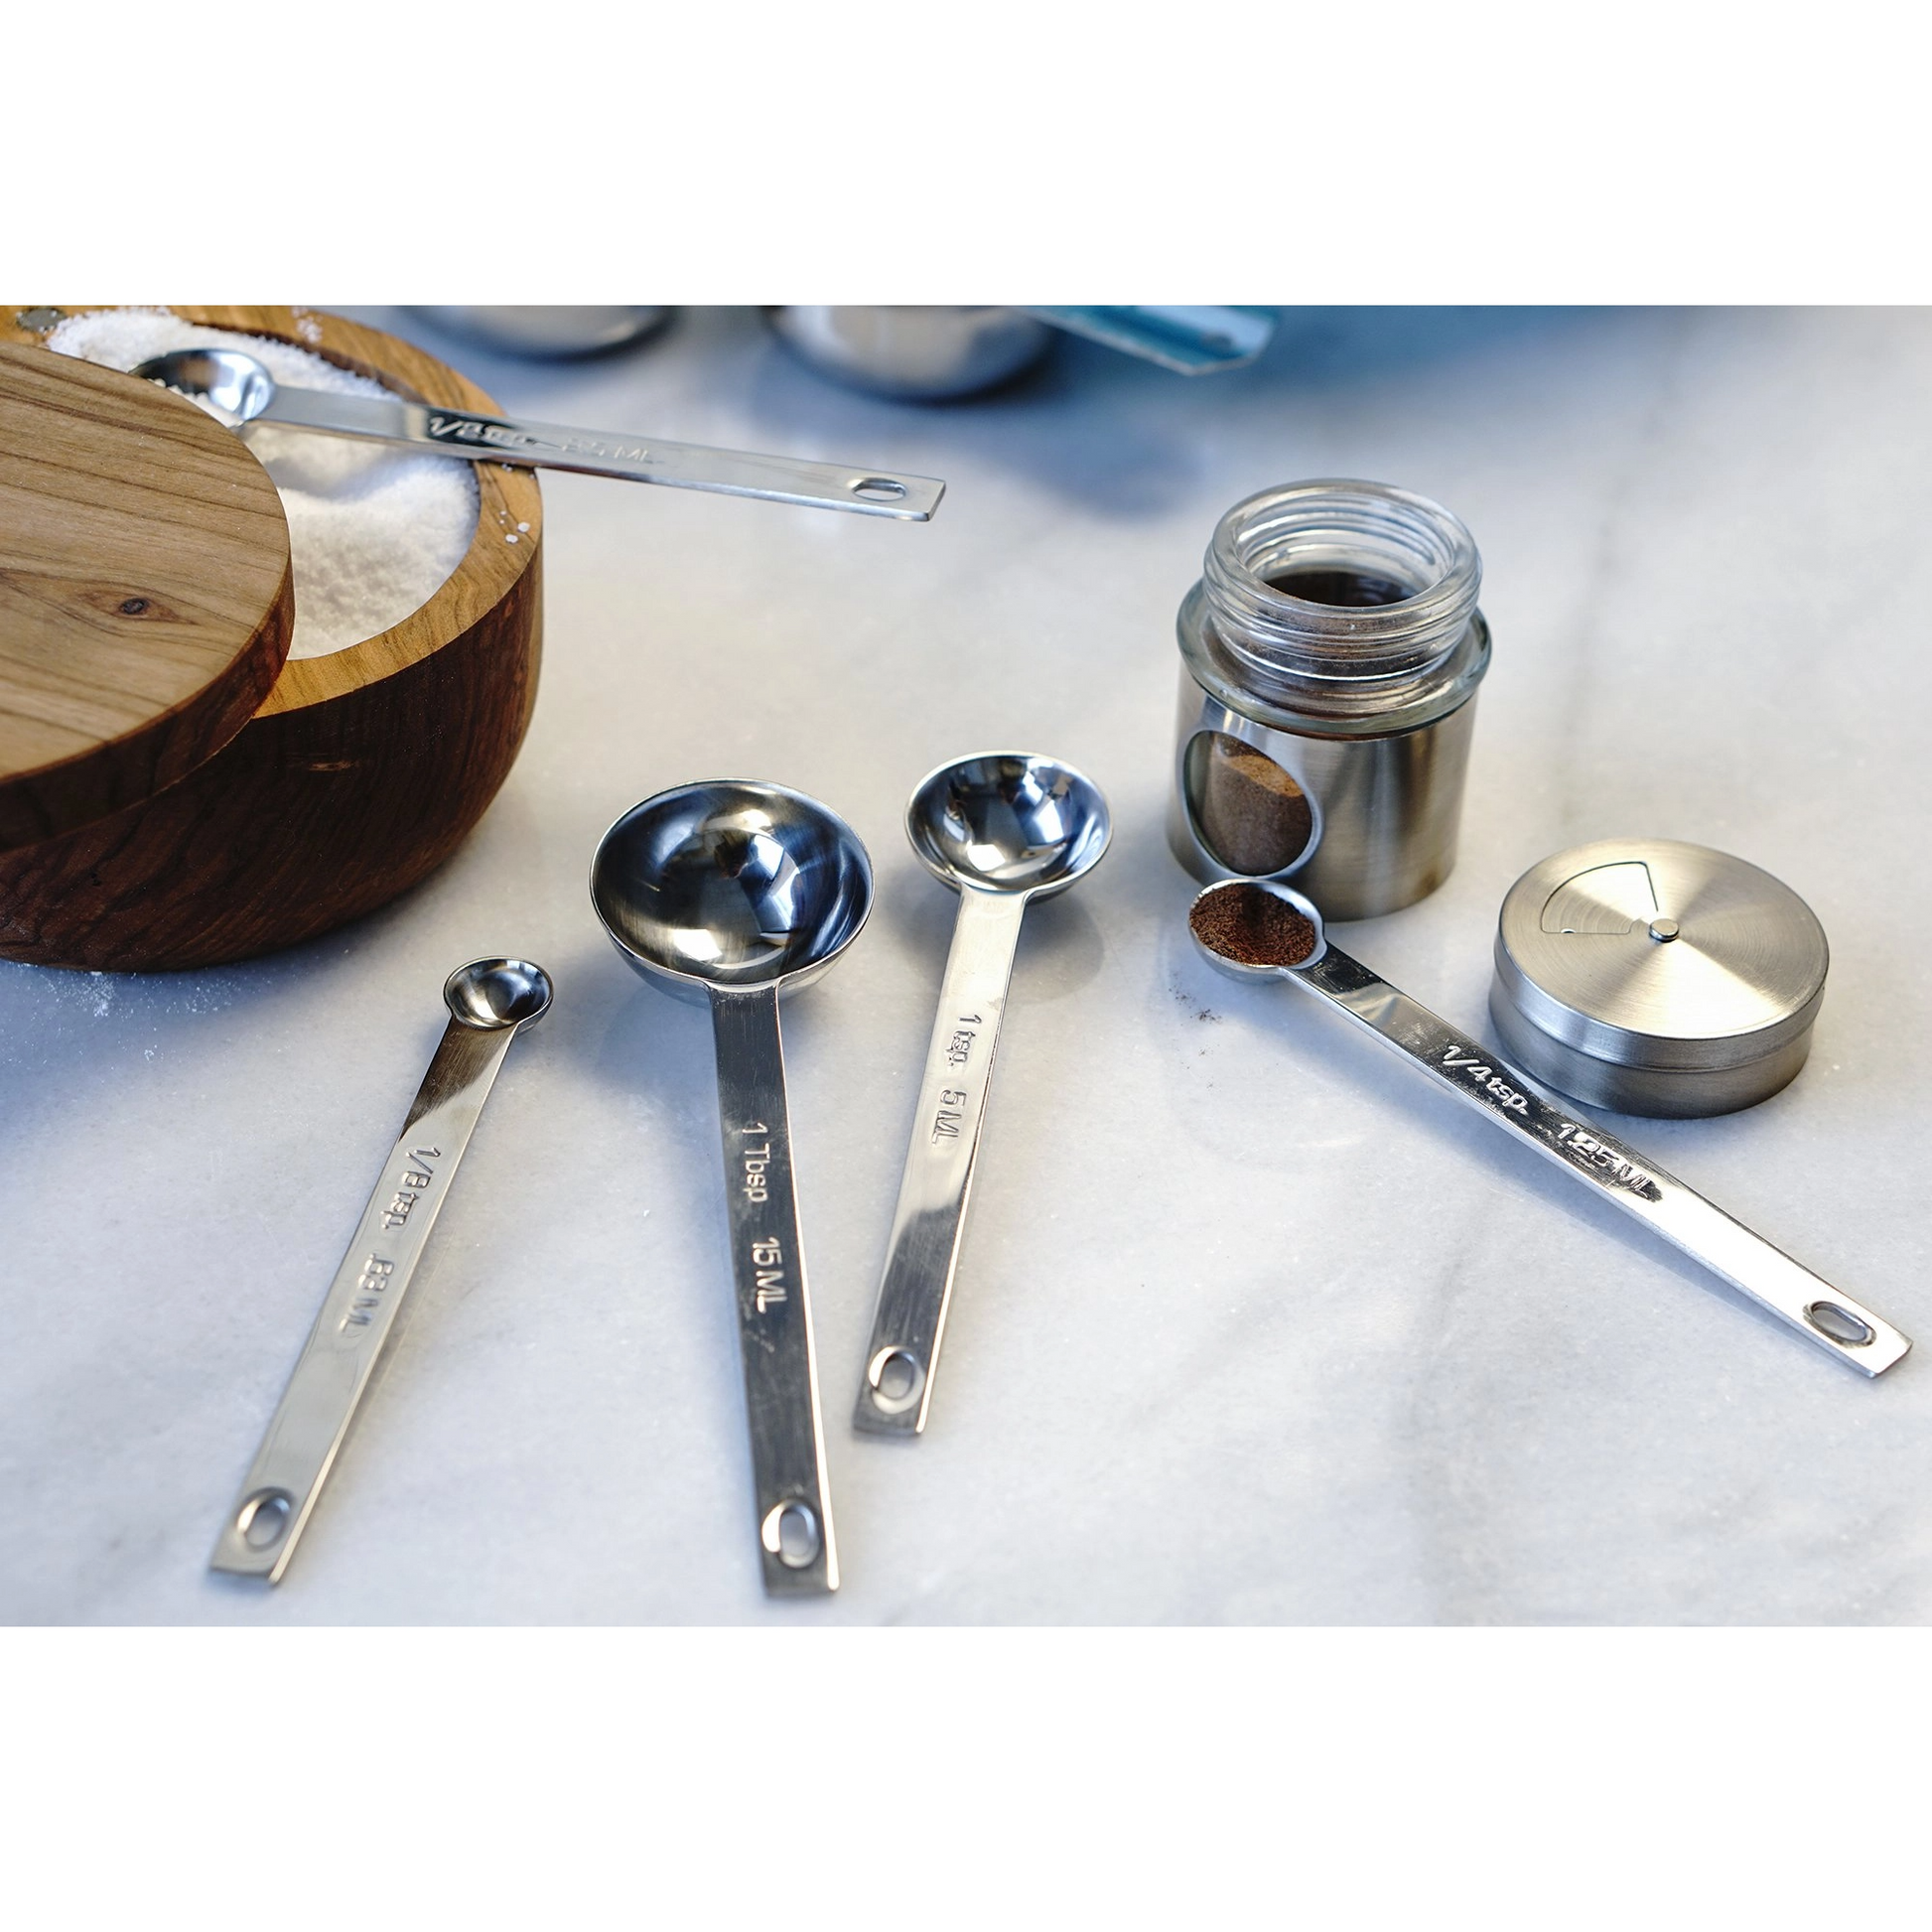 Metric Measuring Spoons (Set of 5)